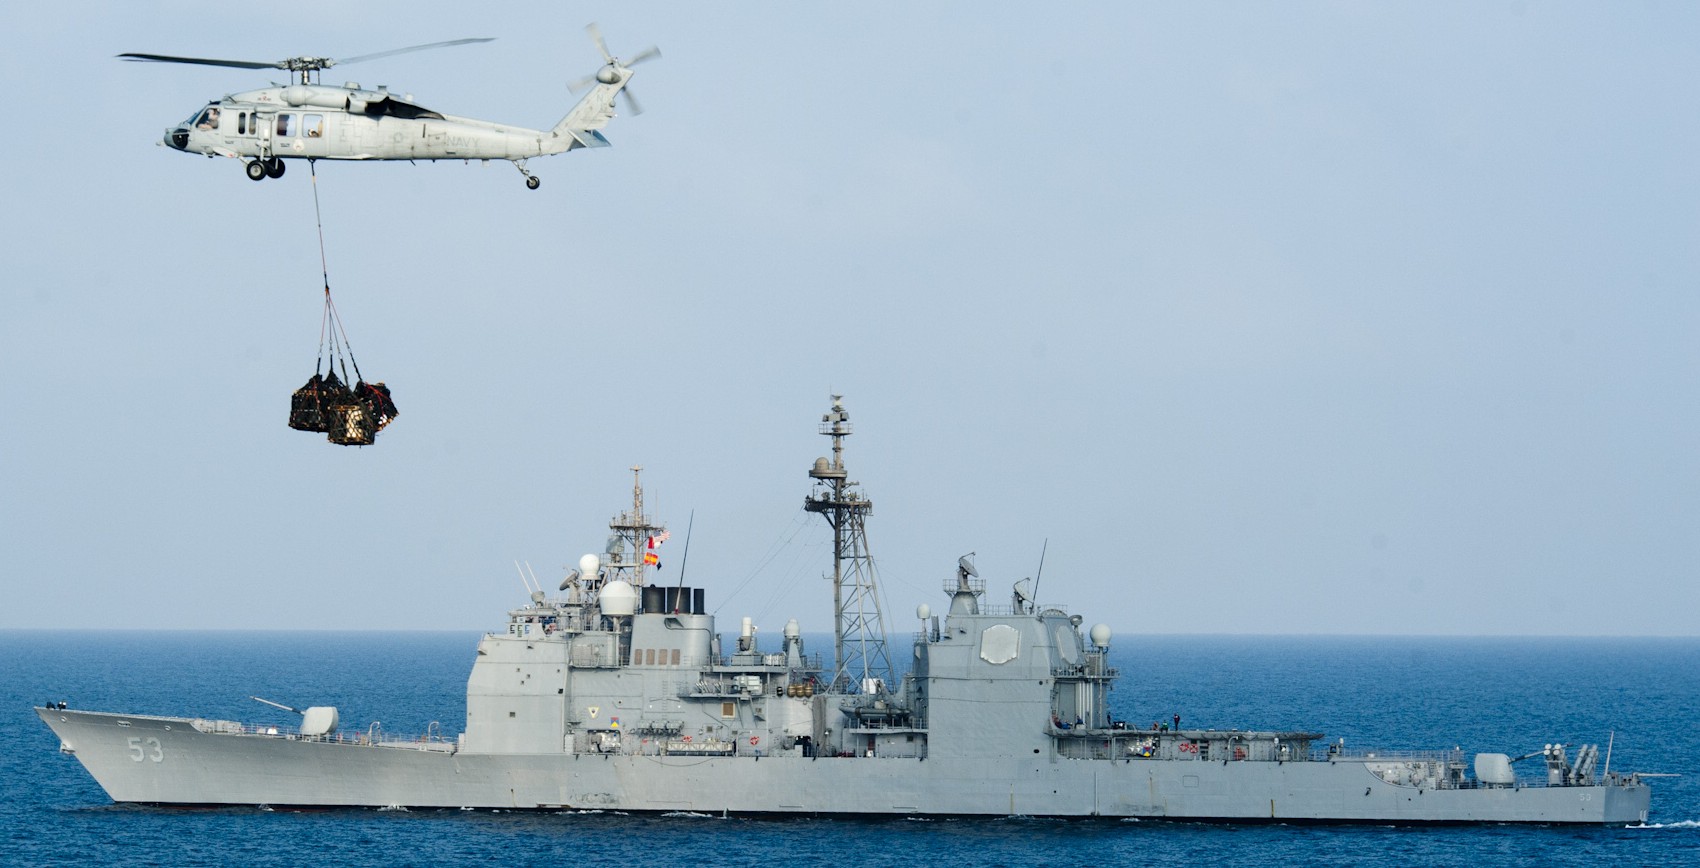 cg-53 uss mobile bay ticonderoga class guided missile cruiser aegis us navy arabian sea 49